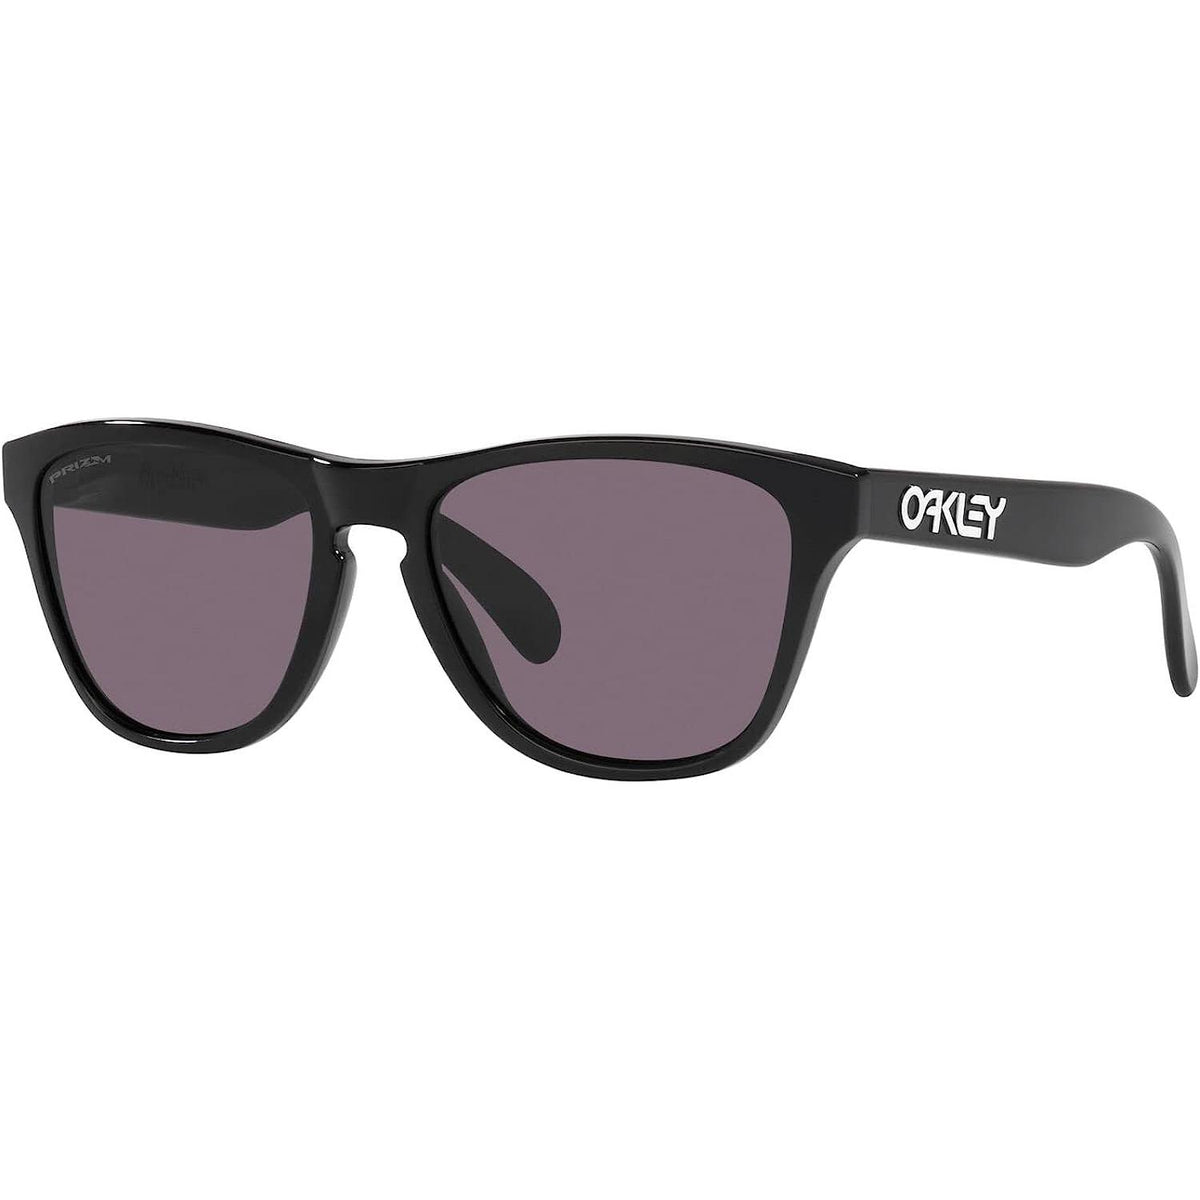 Oakley Frogskins XXS (Youth Fit) Sunglasses